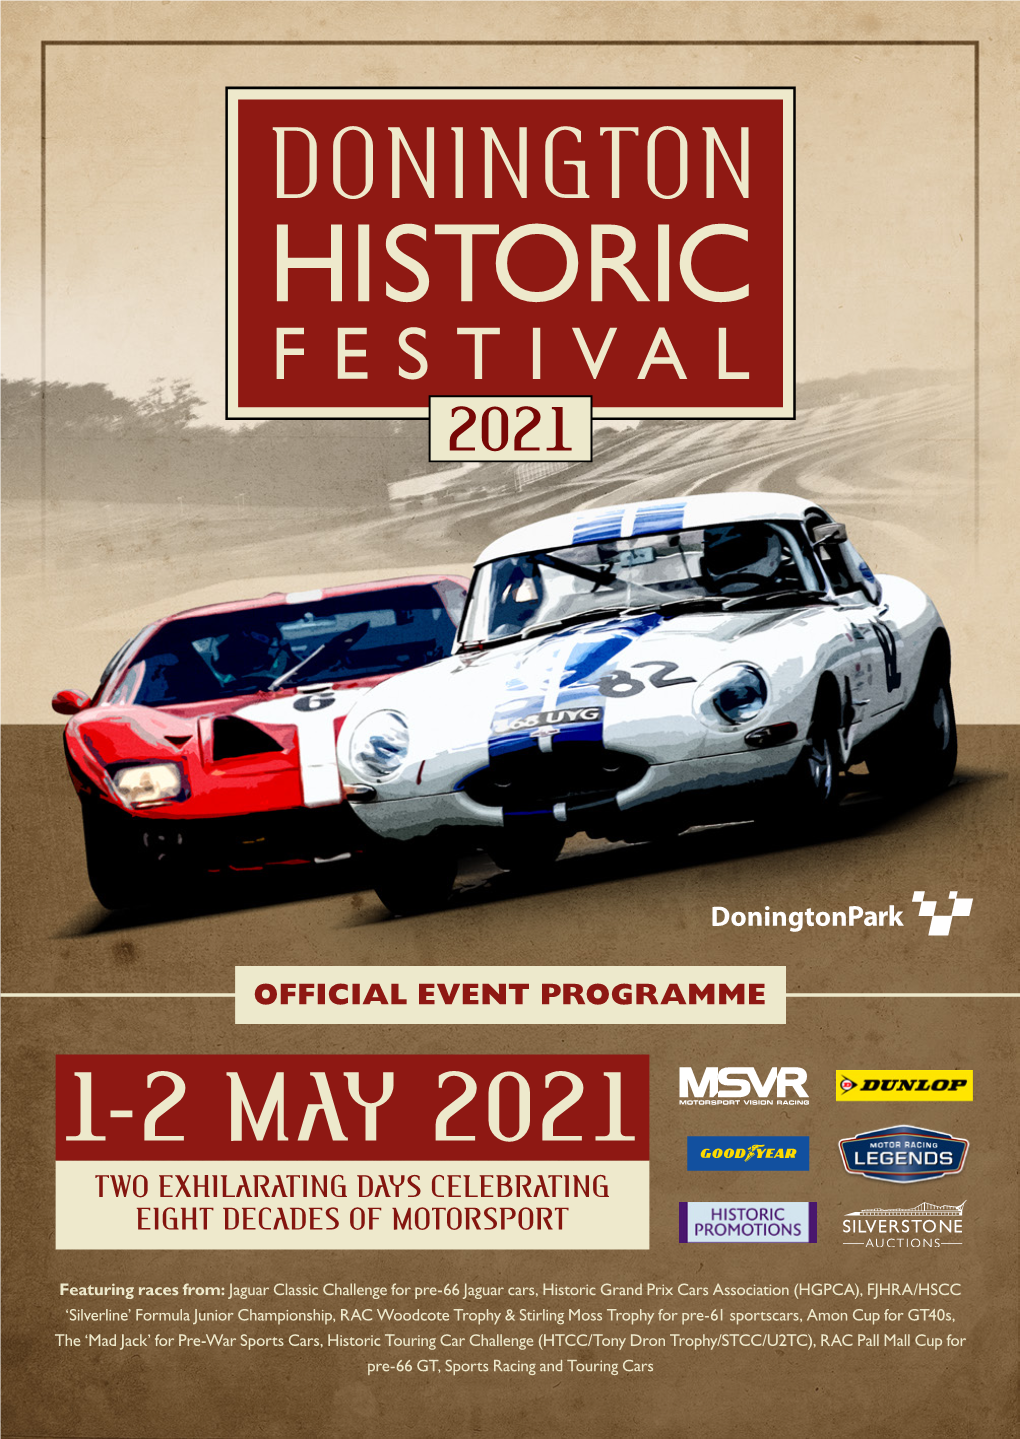 1-2 May 2021 Two Exhilarating Days Celebrating Eight Decades of Motorsport